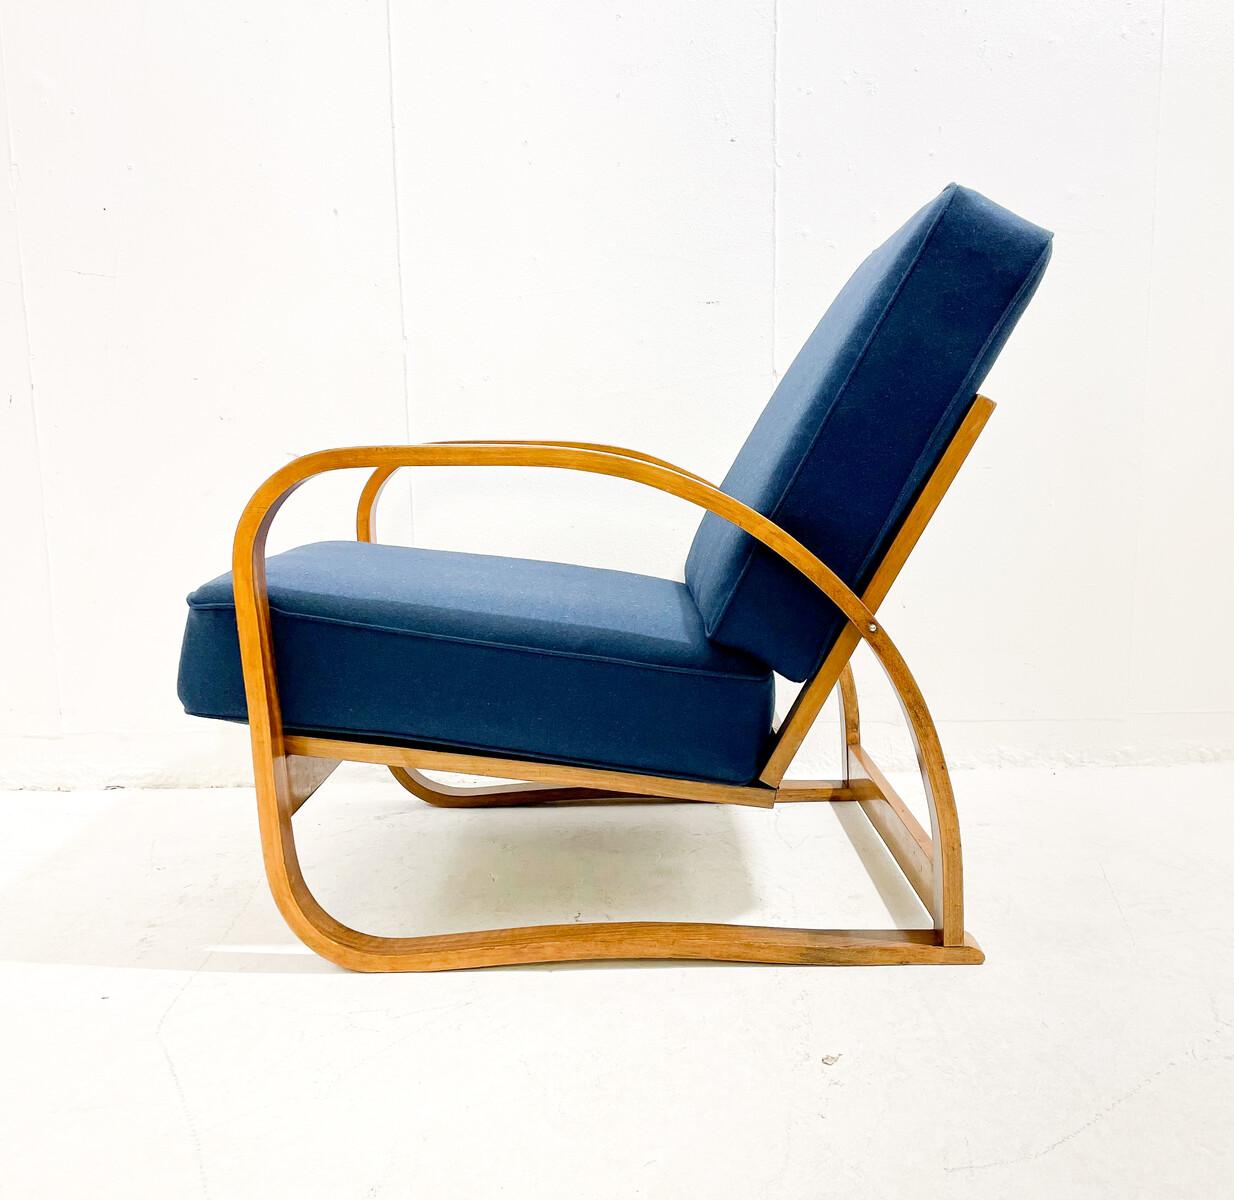 Bentwood armchair, Jindrich Halabala with adjustable back - Czech Republic 1940s.